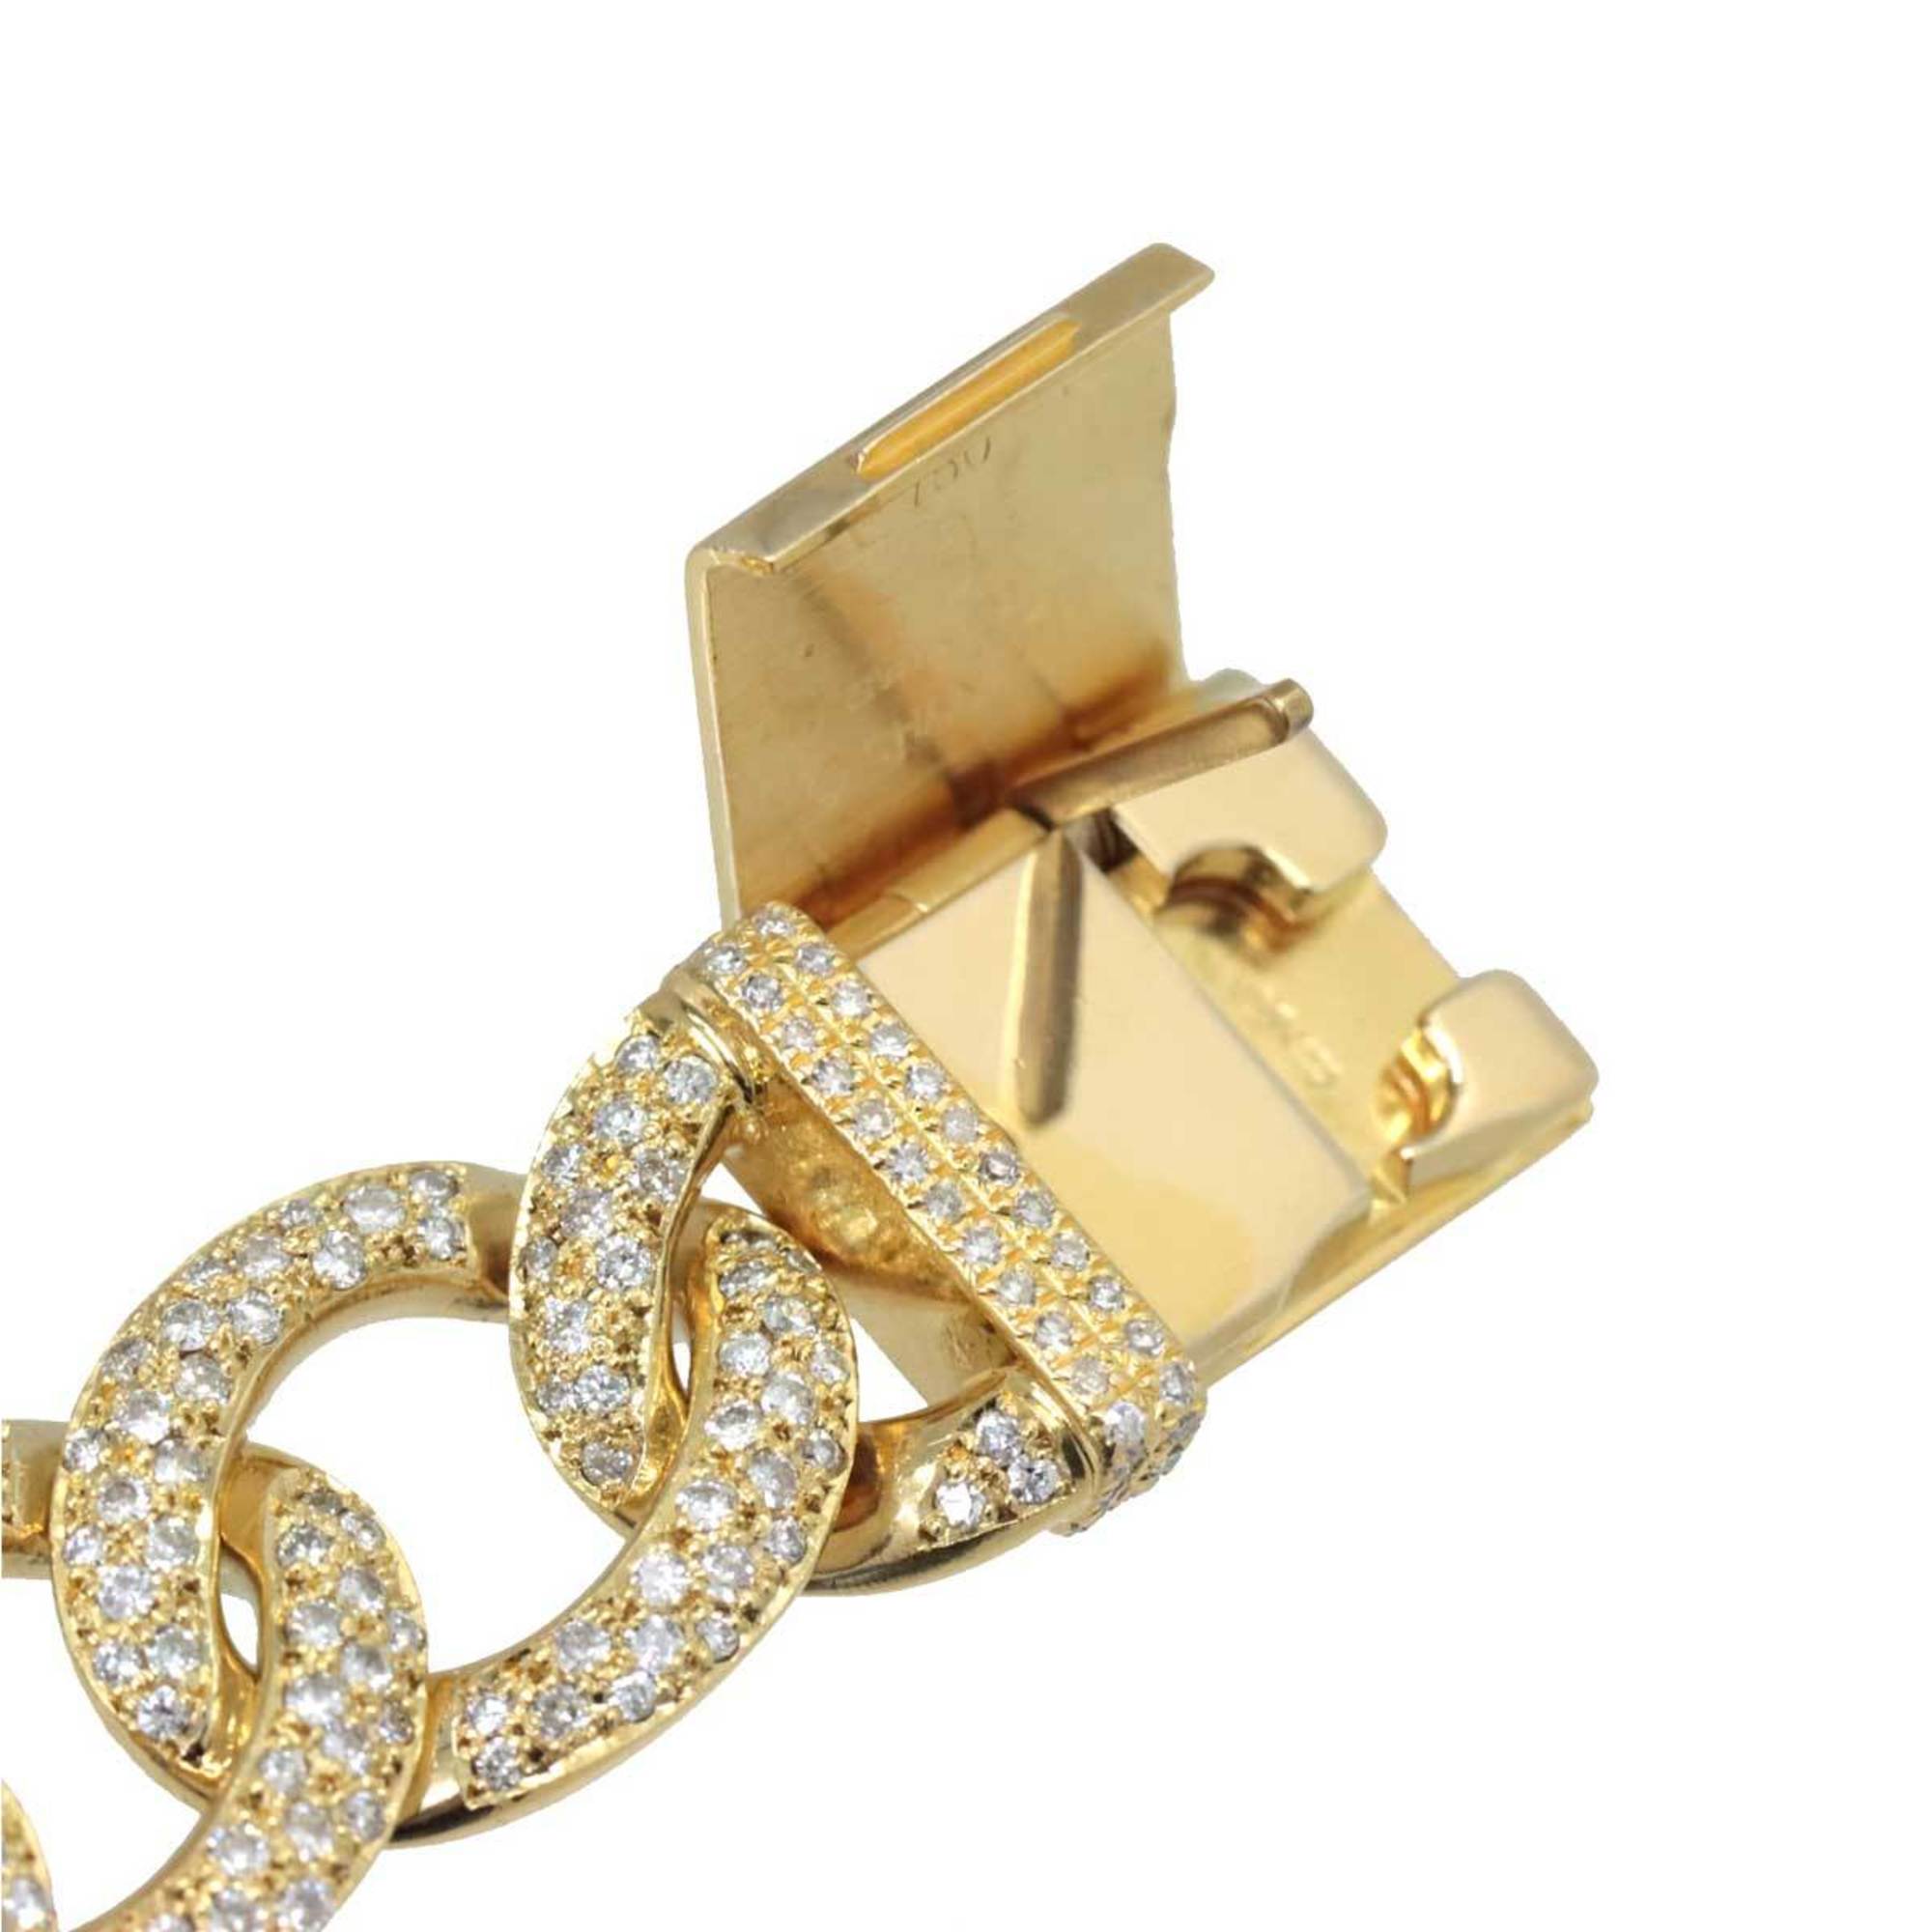 CHANEL Premiere L size H0114 Genuine Diamond Ladies Watch Black Dial K18YG Yellow Gold Solid Quartz